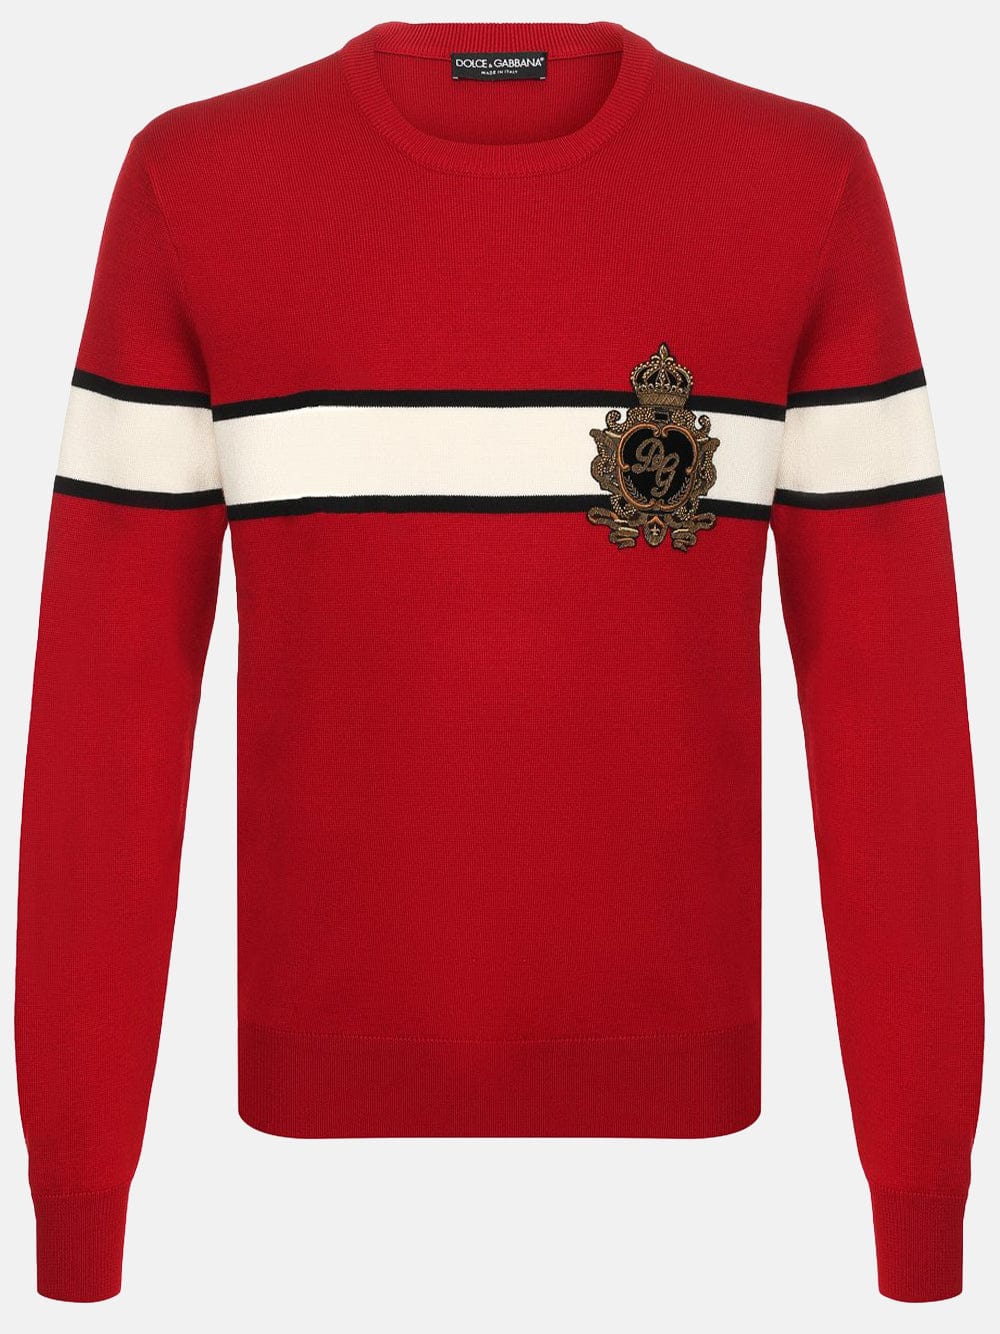 Dolce & Gabbana Crest Logo Striped Sweater